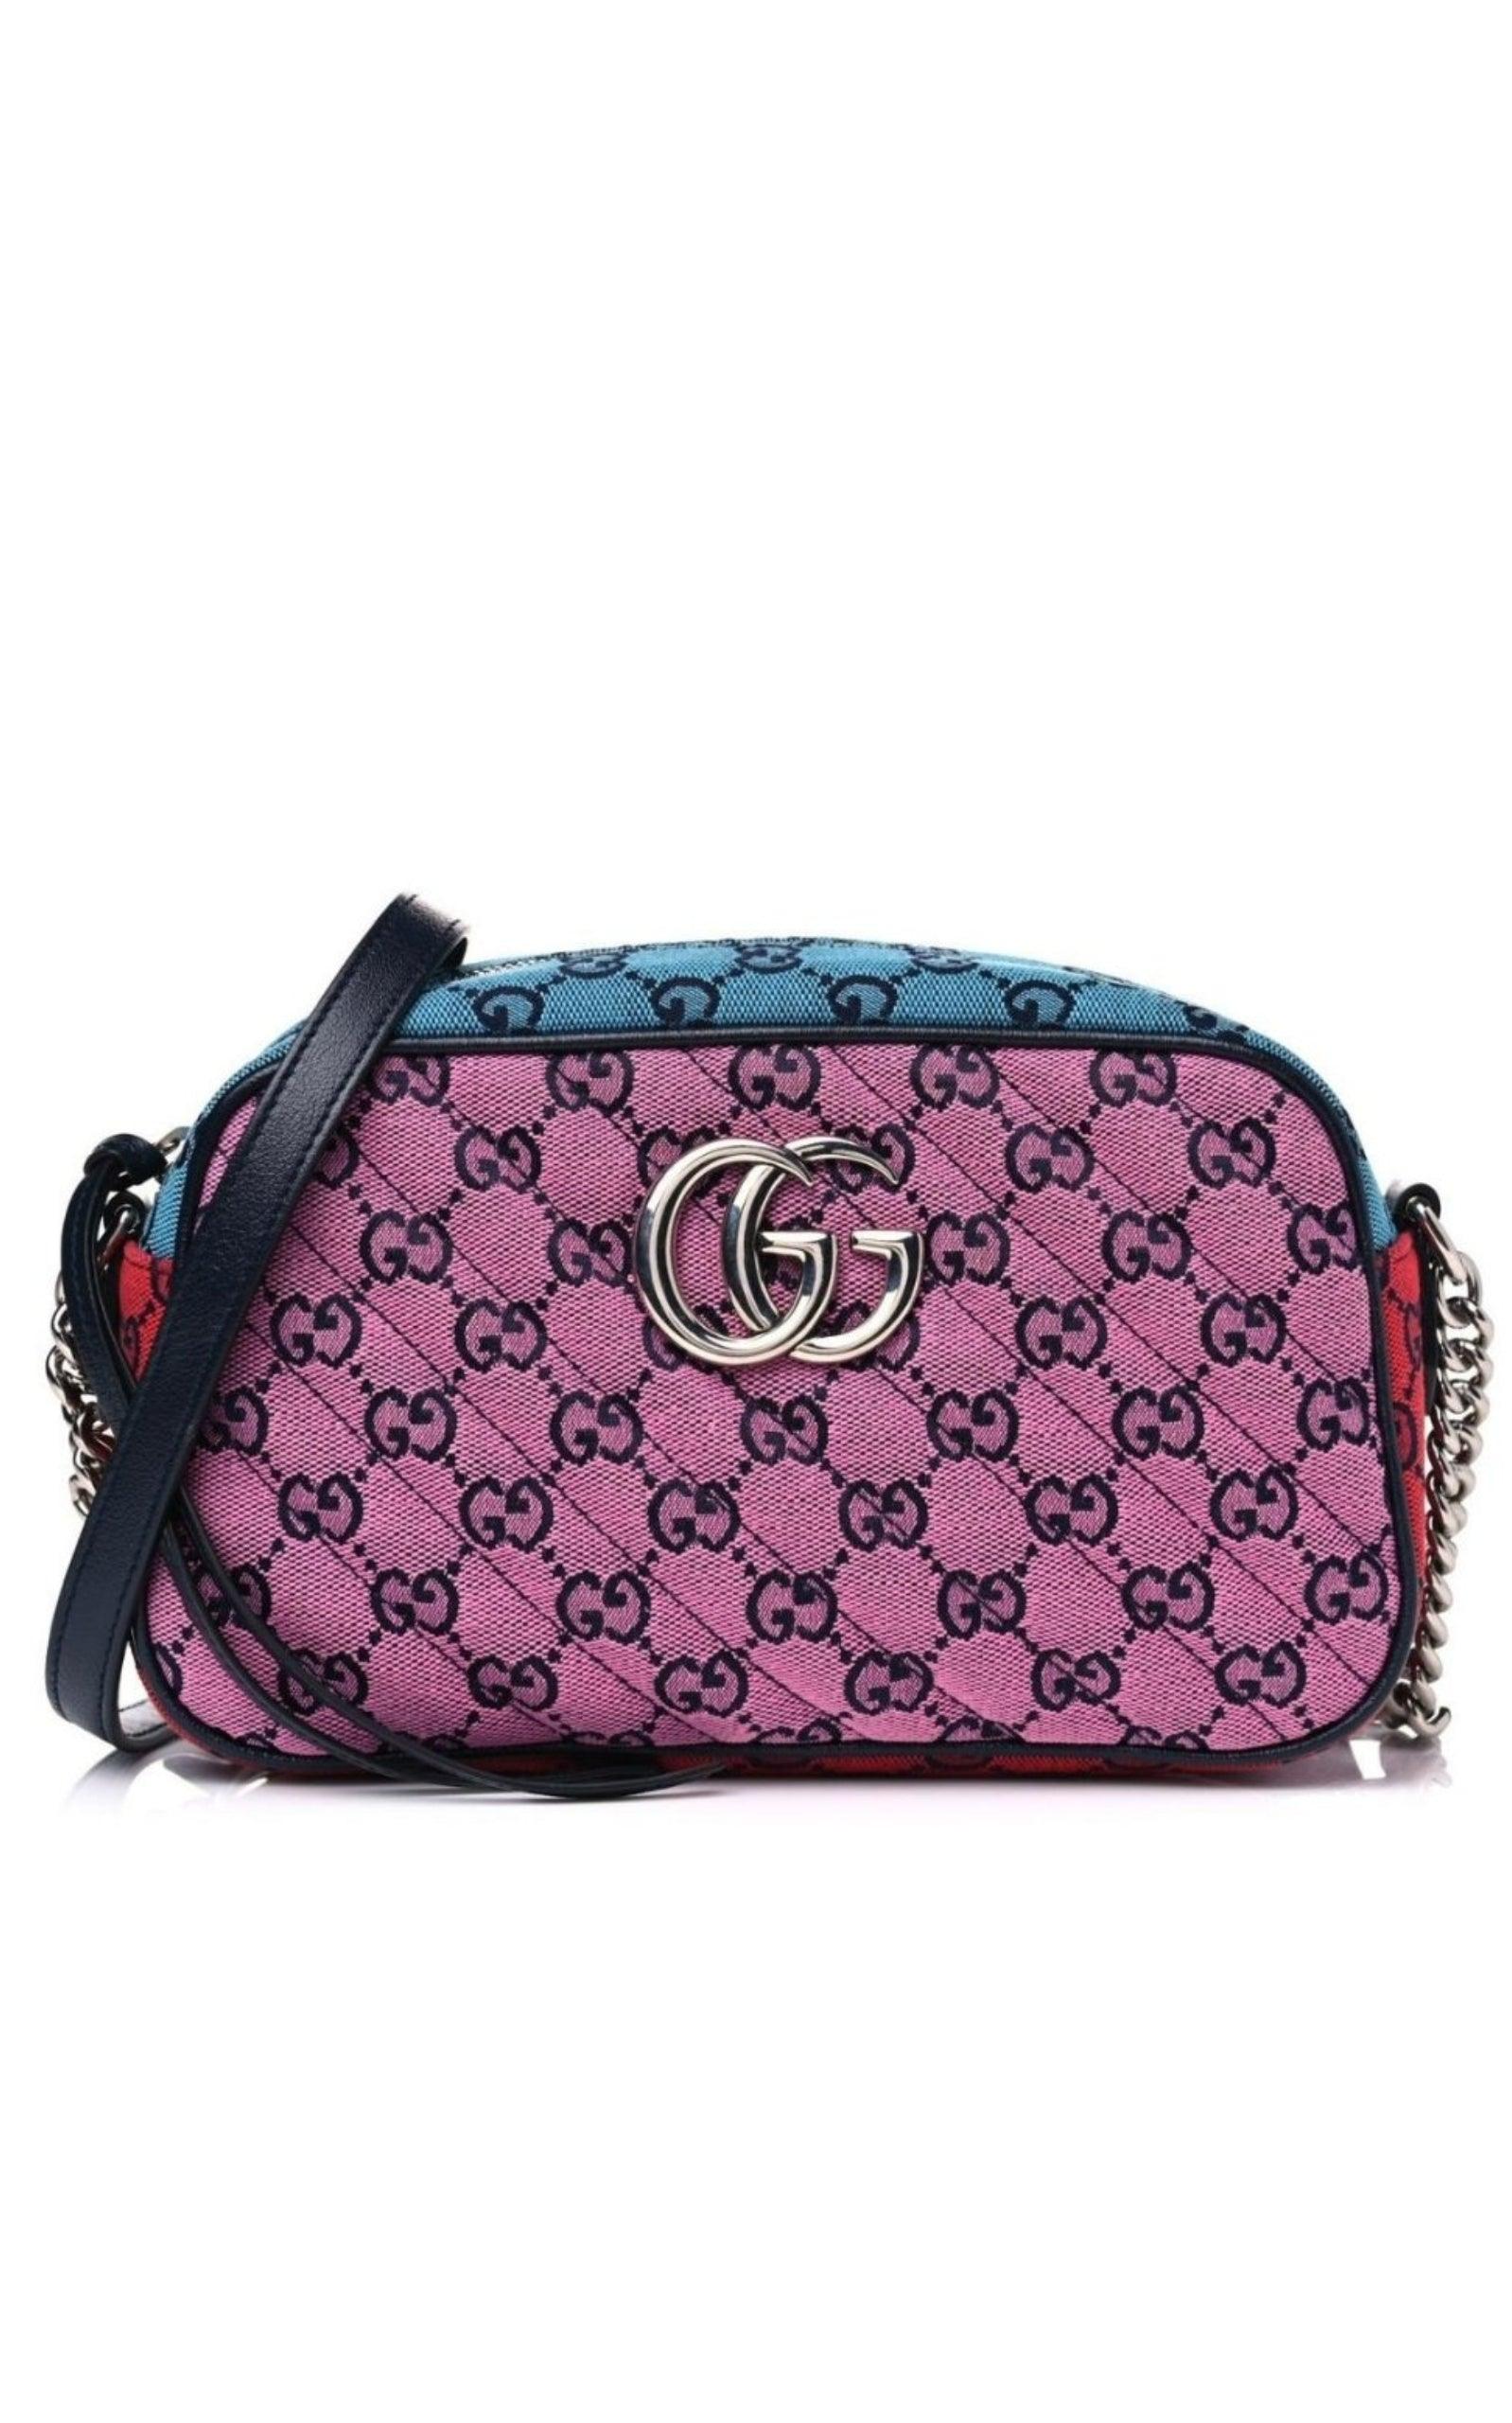 Gucci GG Marmont Matelassé Mini Bag in Red